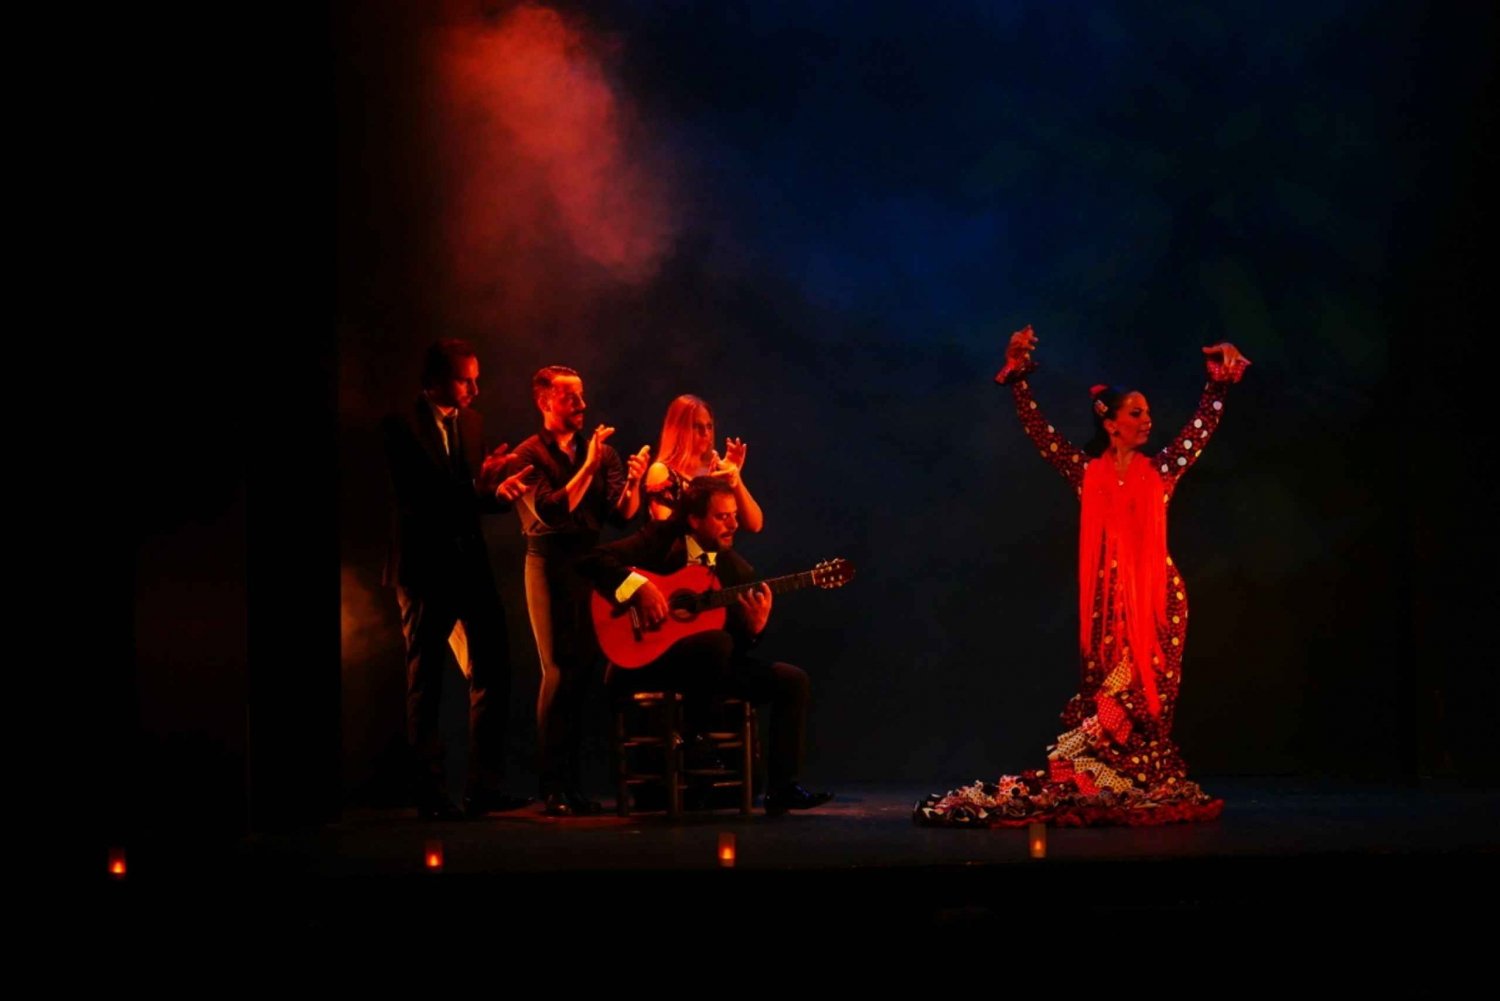 Madrid: 'Emociones' Live Flamenco Performance